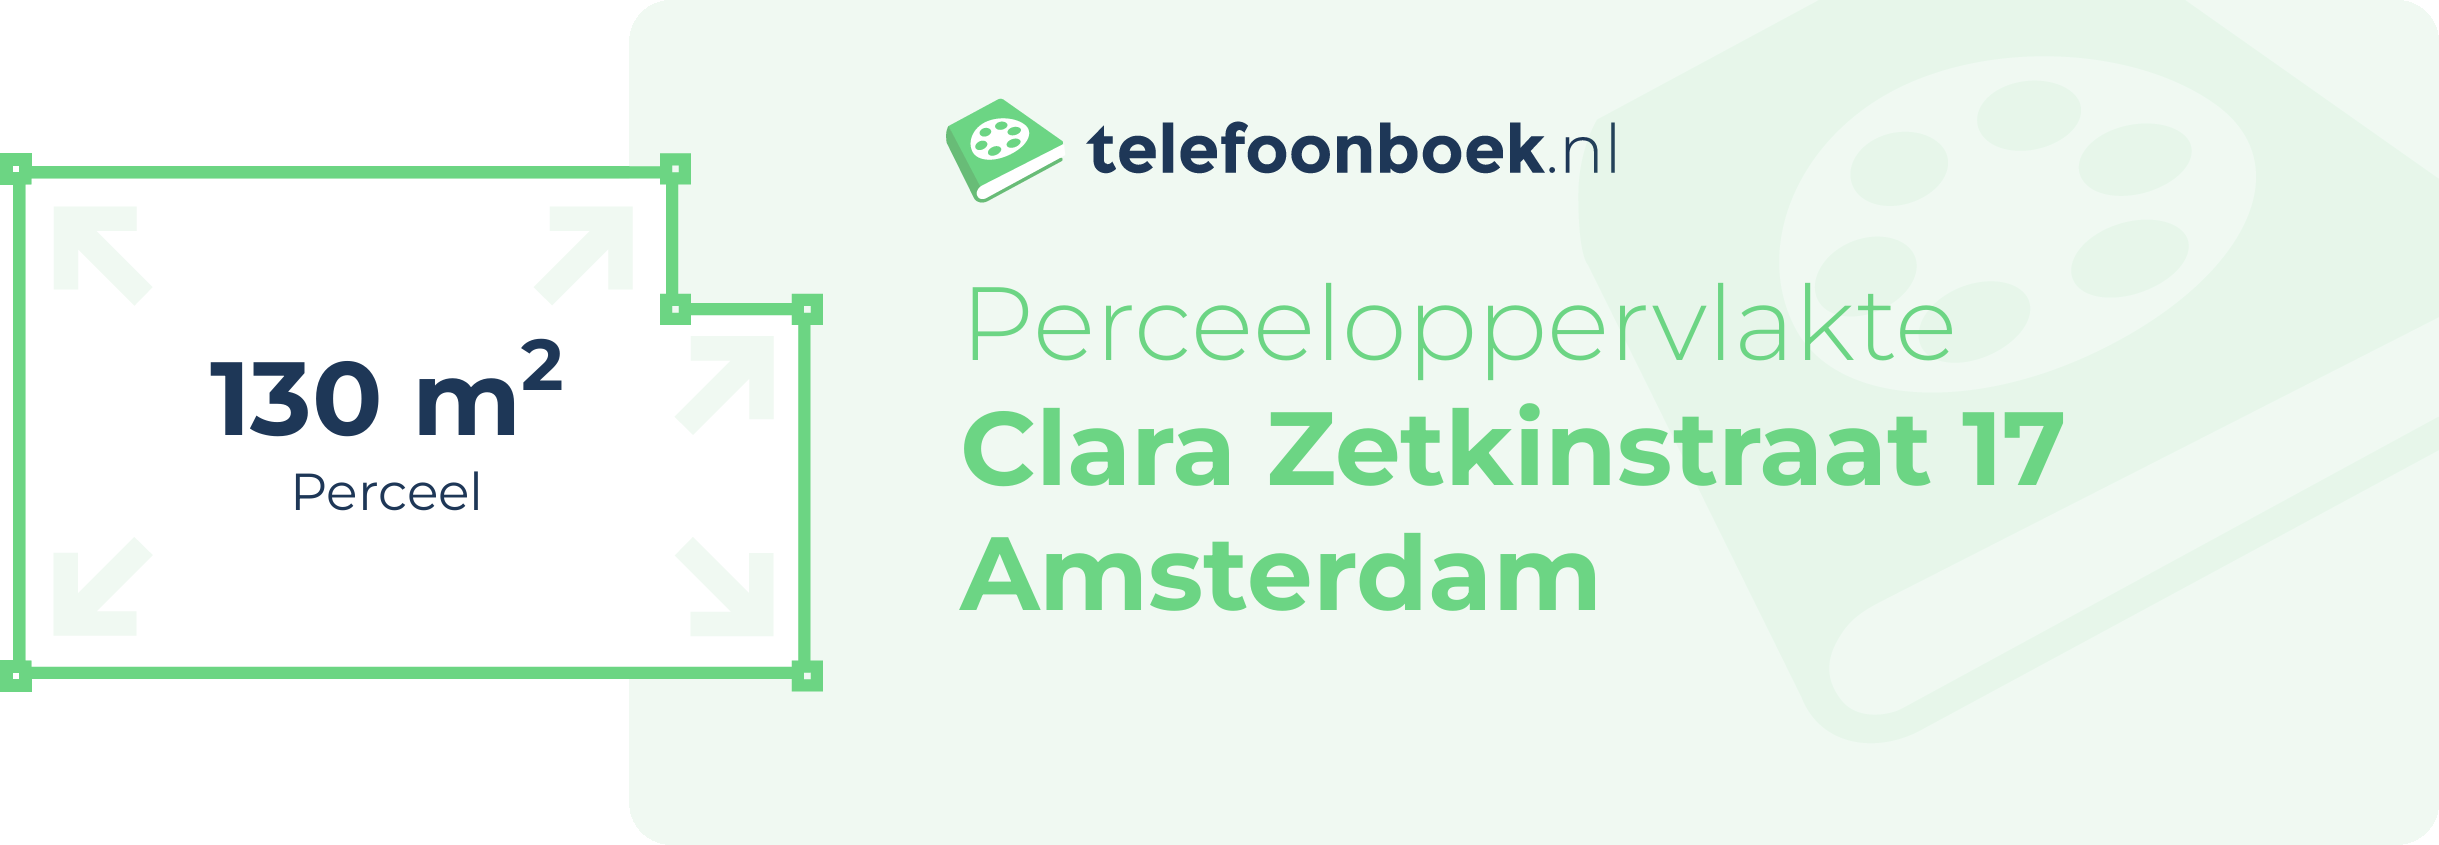 Perceeloppervlakte Clara Zetkinstraat 17 Amsterdam